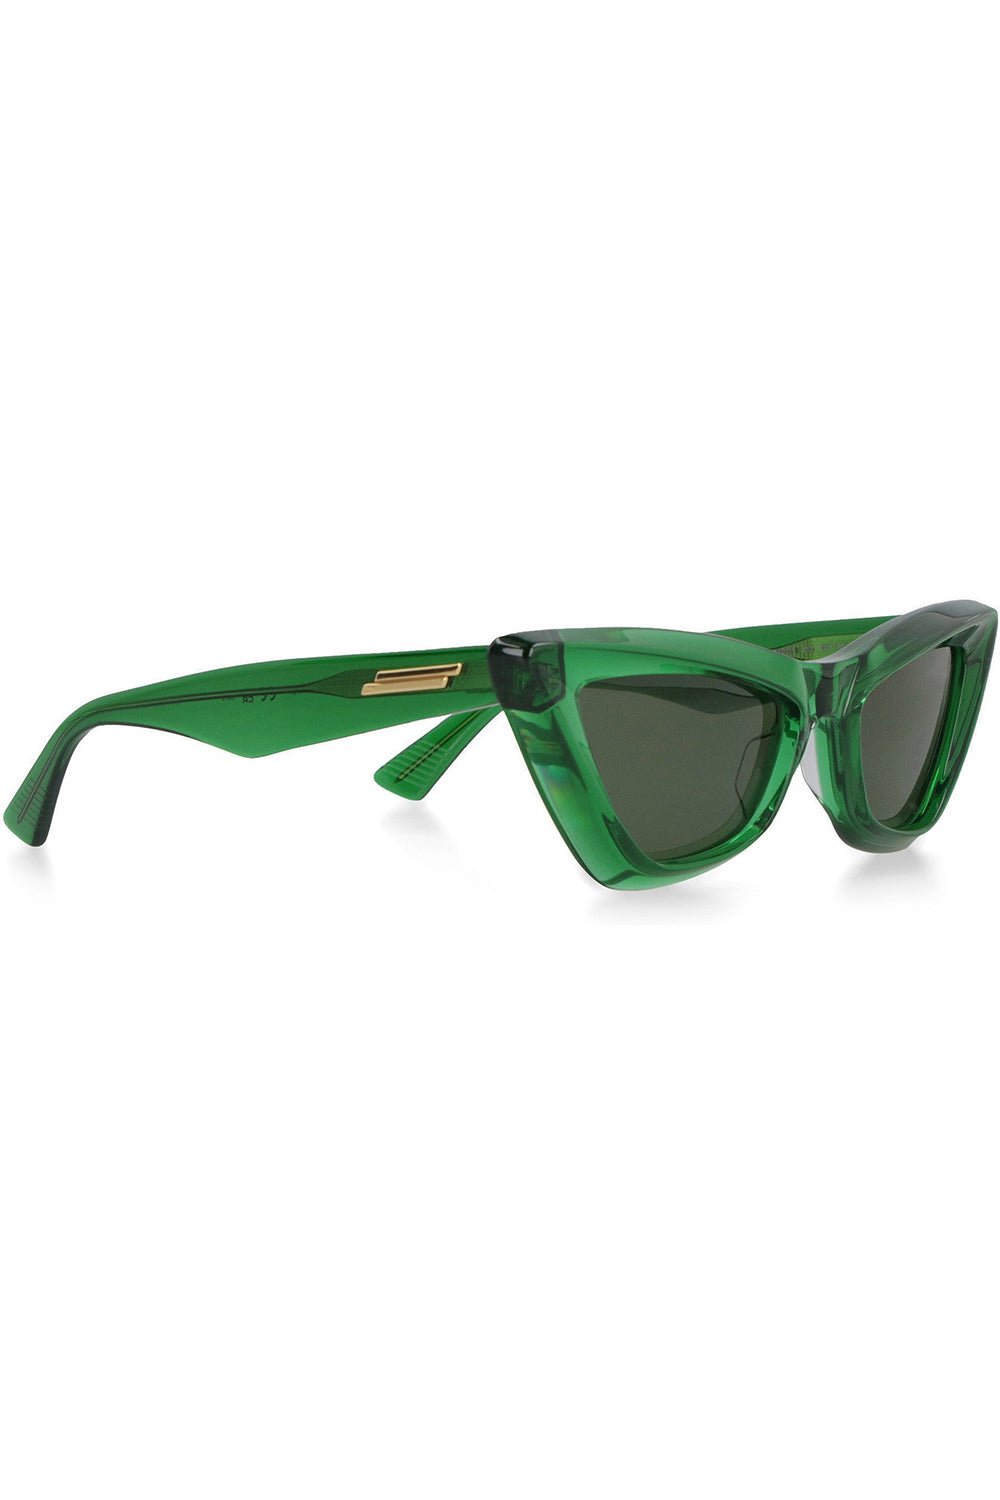 BOTTEGA VENETA-Angle Cat Eye Sunglasses-GREEN/GREEN